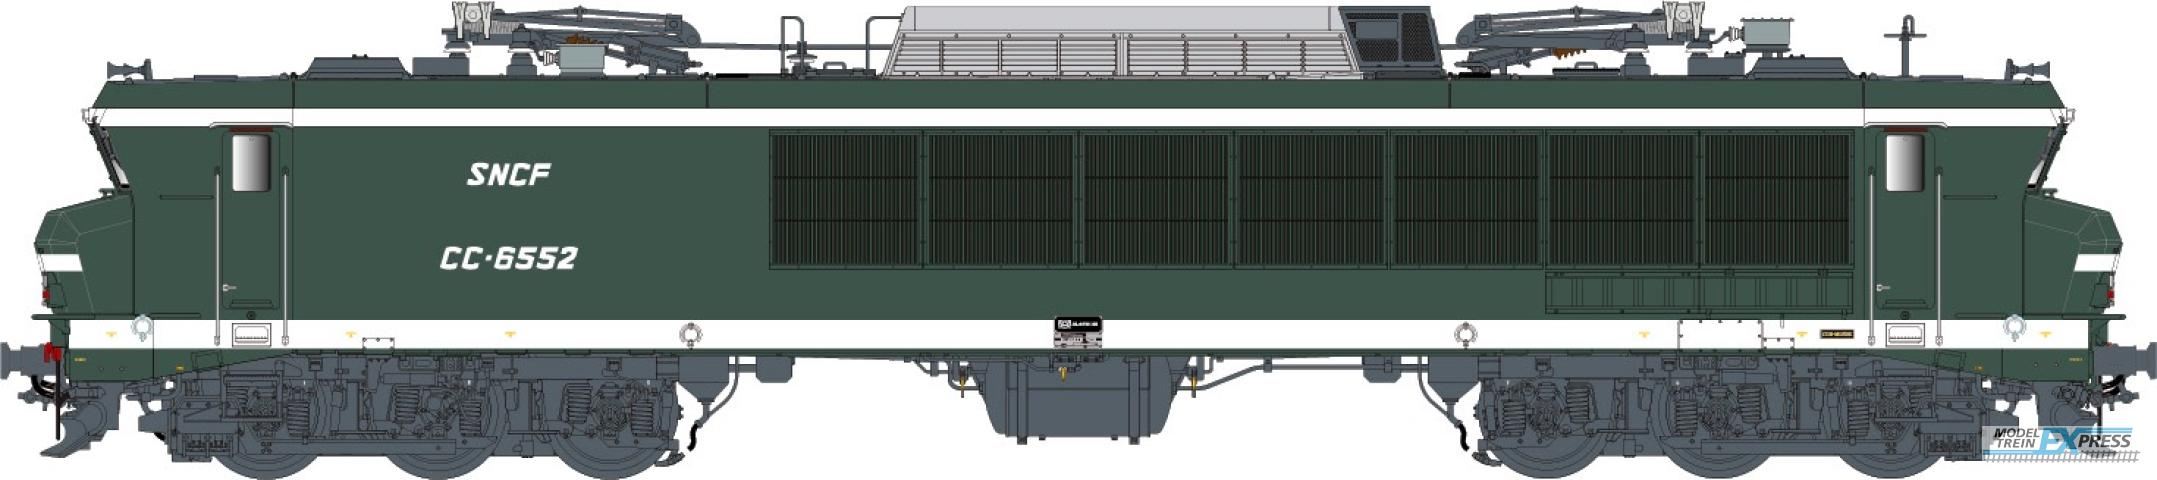 LS Models 10815S CC 6552, Maurienne-livrei, gemoderniseerde buffers, depot Lyon-Mouche / Ep. IV / SNCF / HO / AC SOUND / 1 P.